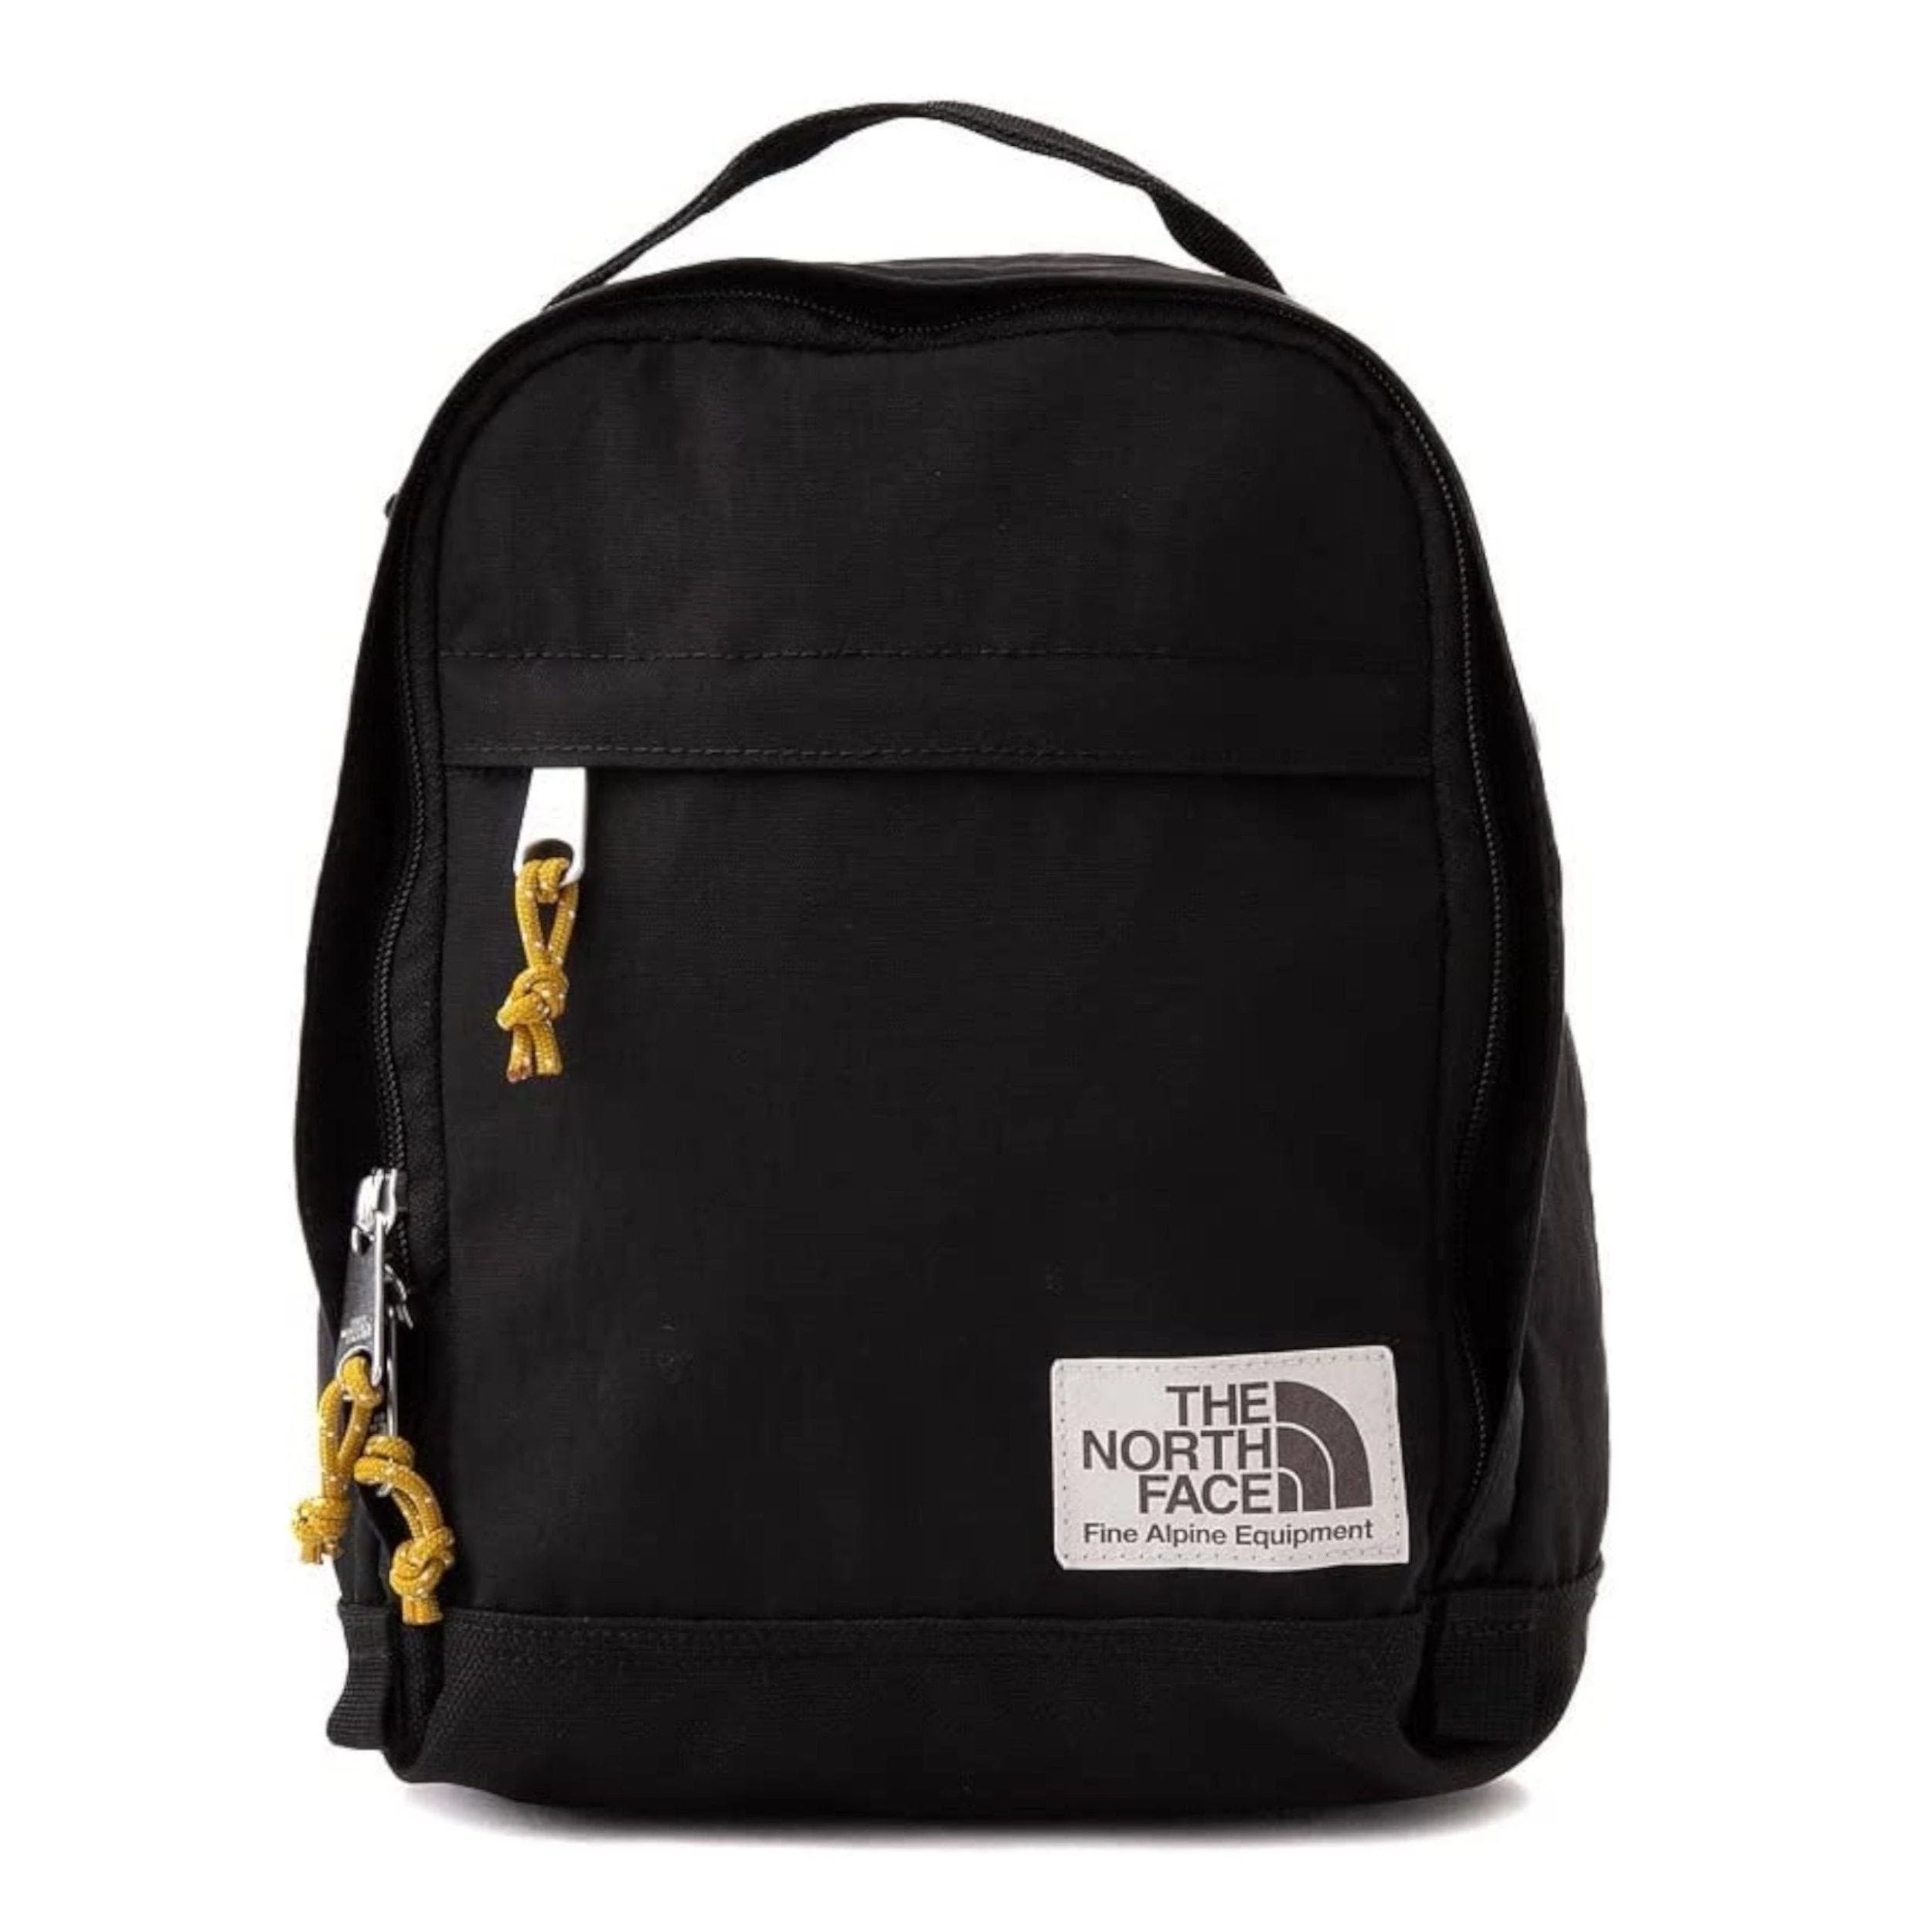 Stylish Black Mini Backpack for Kids | Image